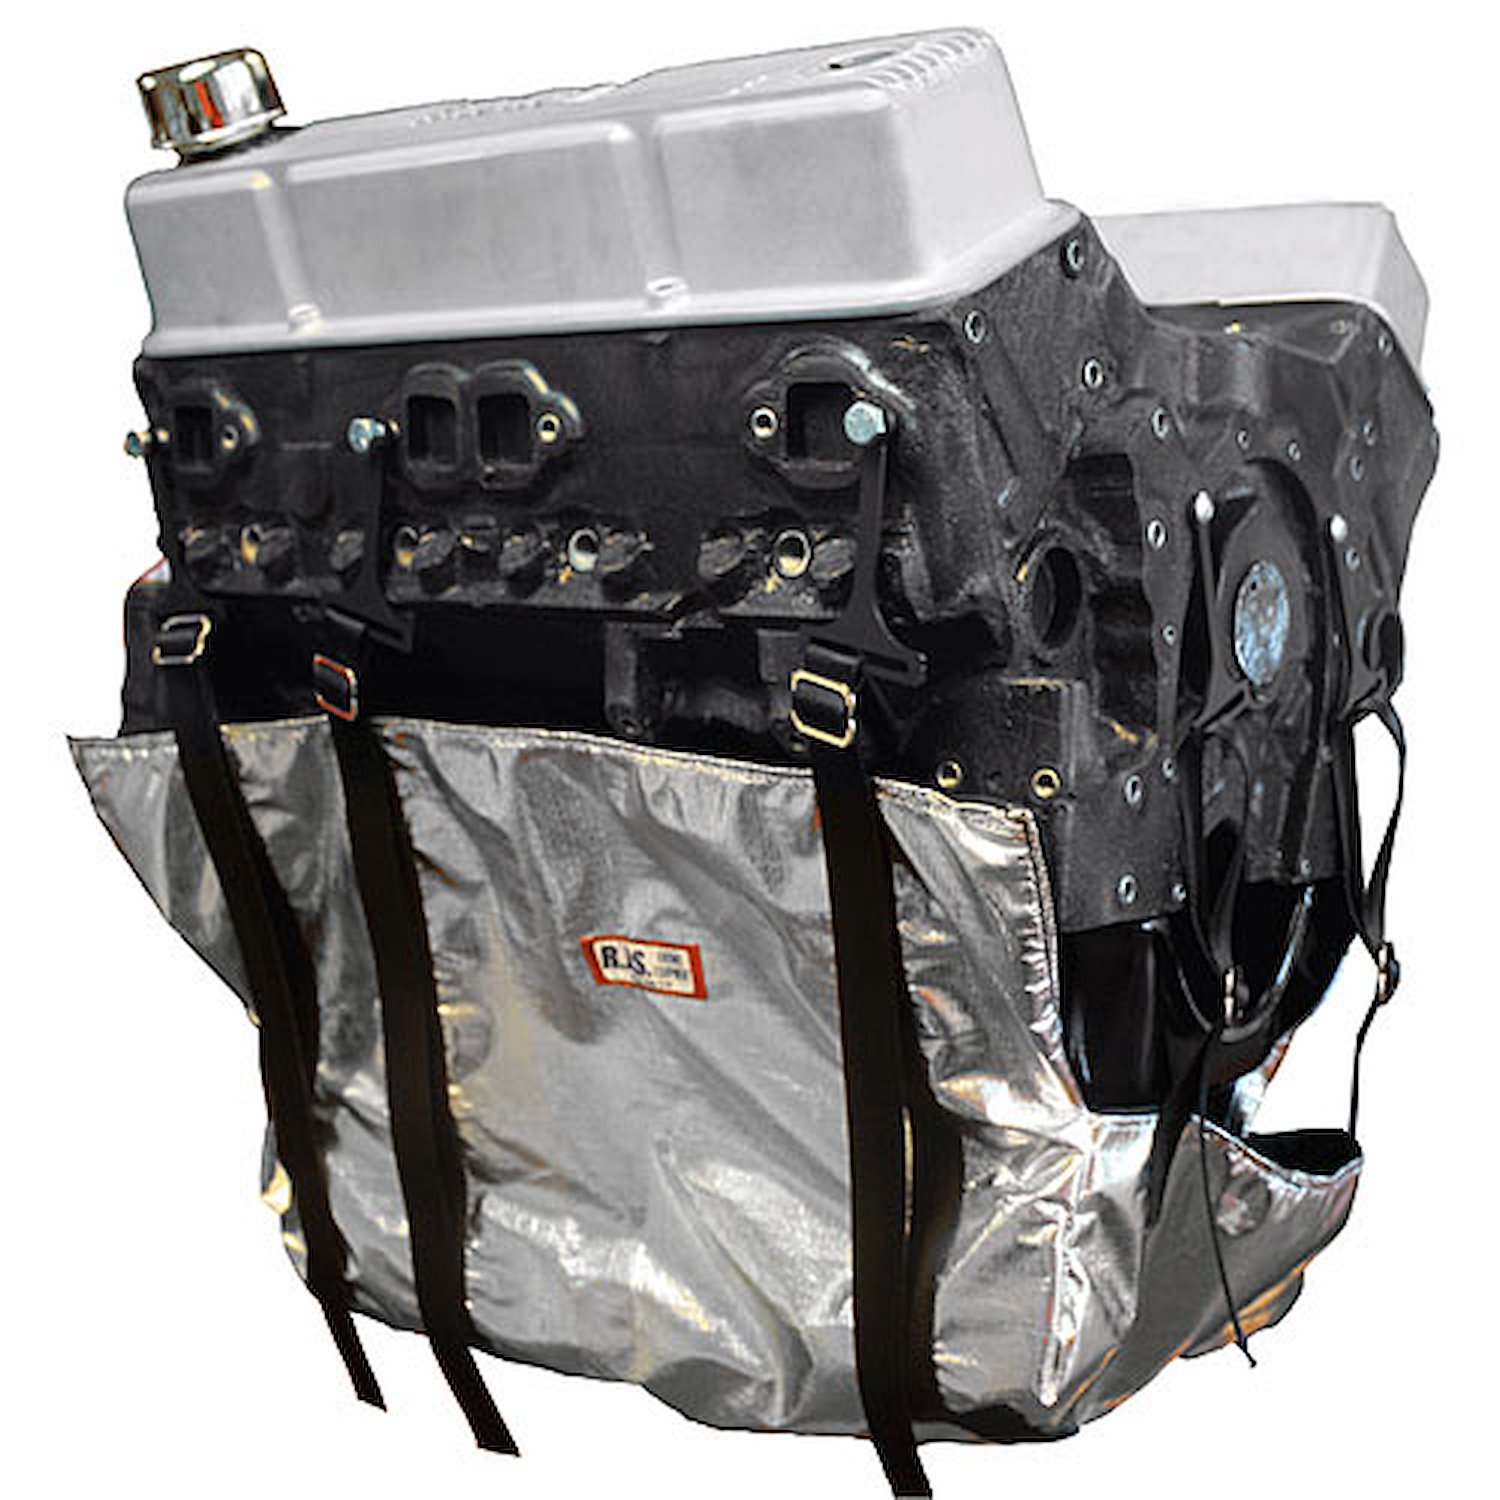 Aluminized Sportsman Engine Diaper Kit